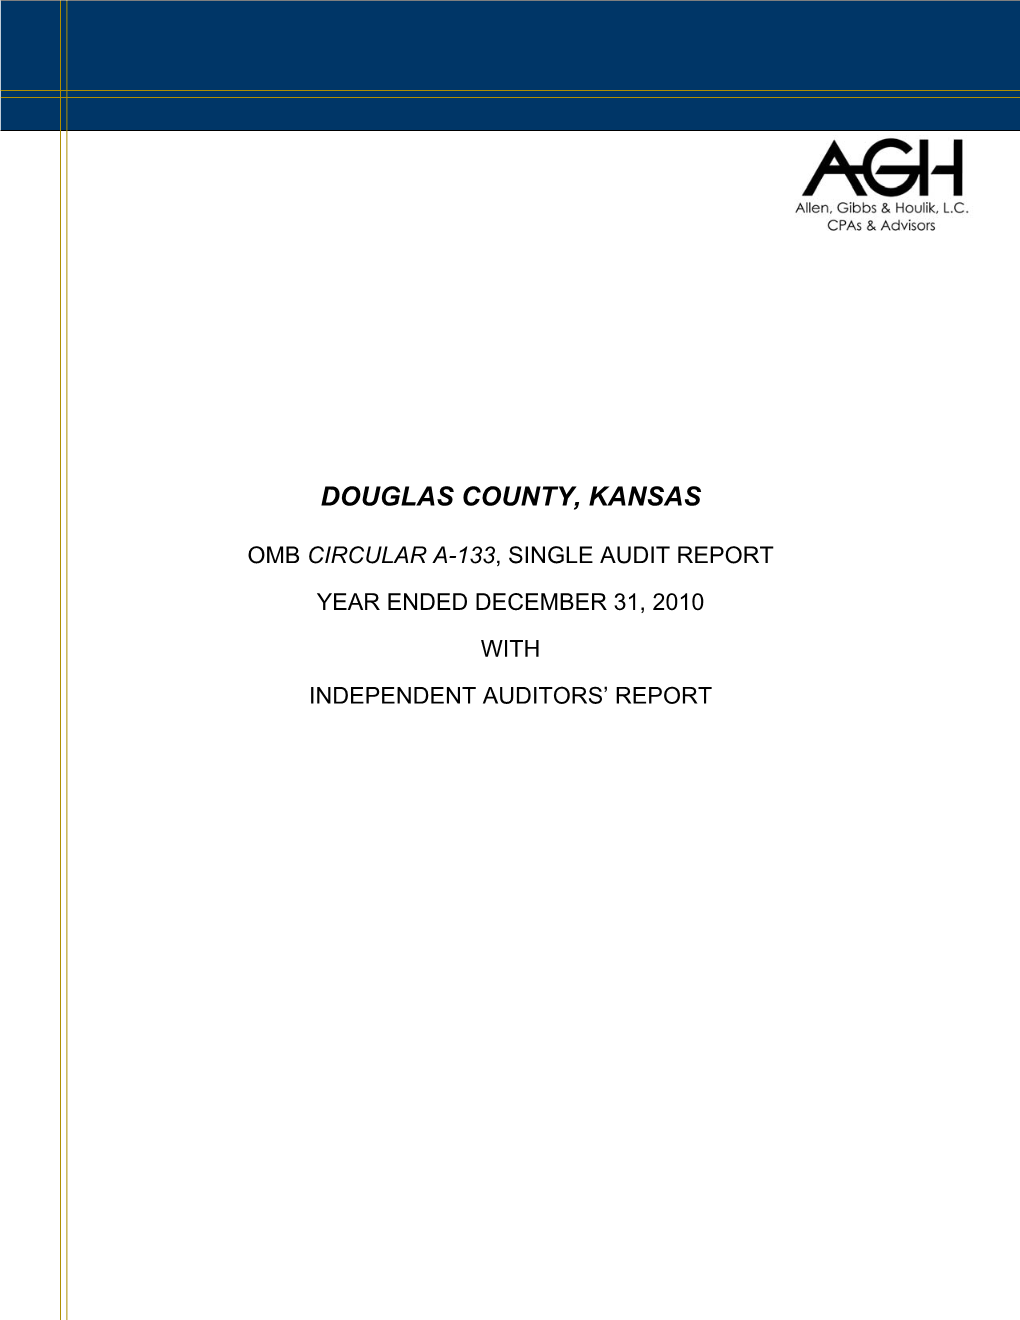 2010 Single Audit Report